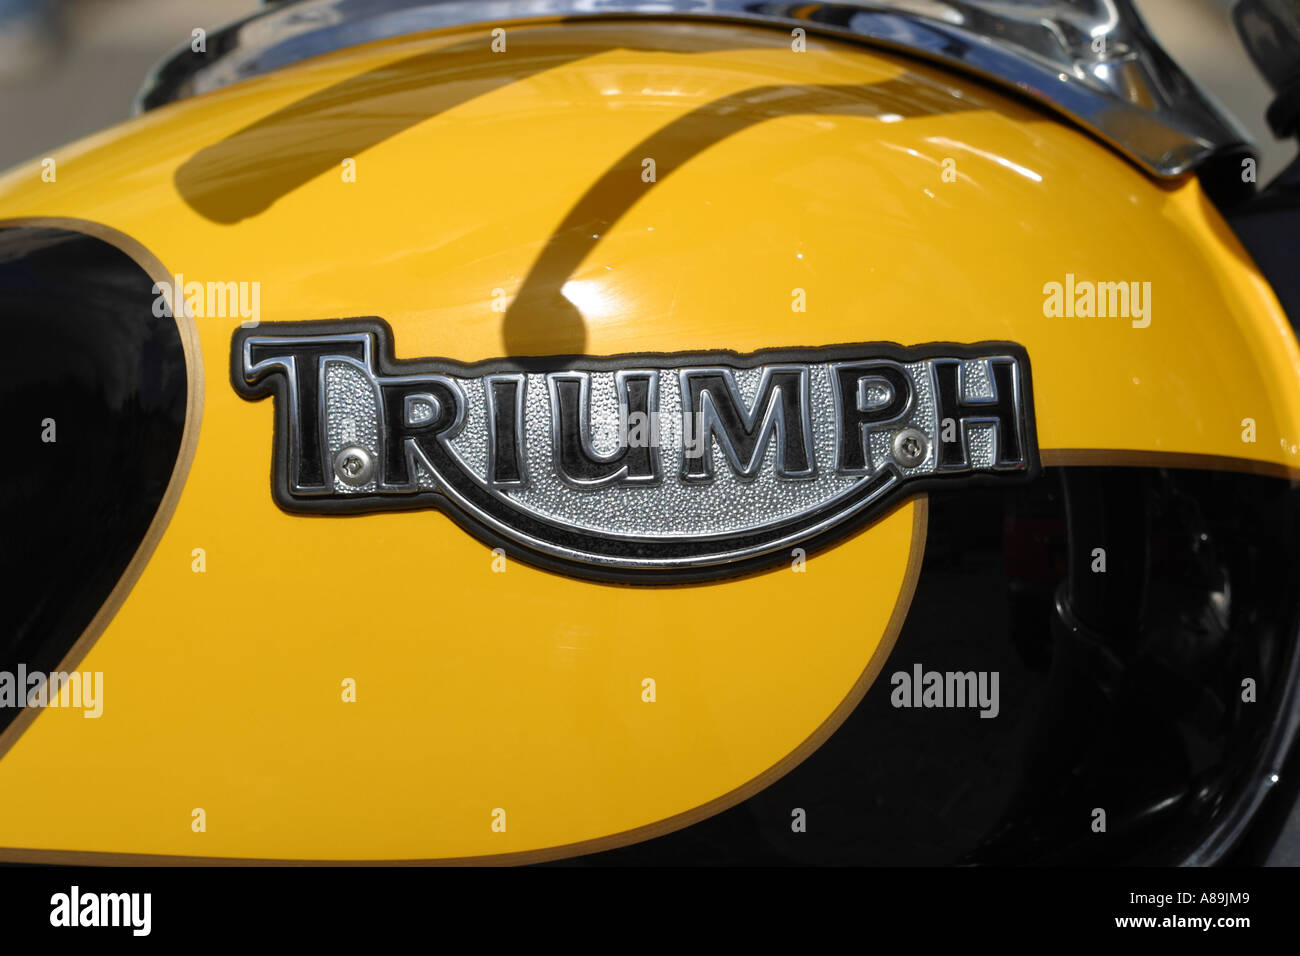 Moto Triumph Speedmaster Banque D'Images